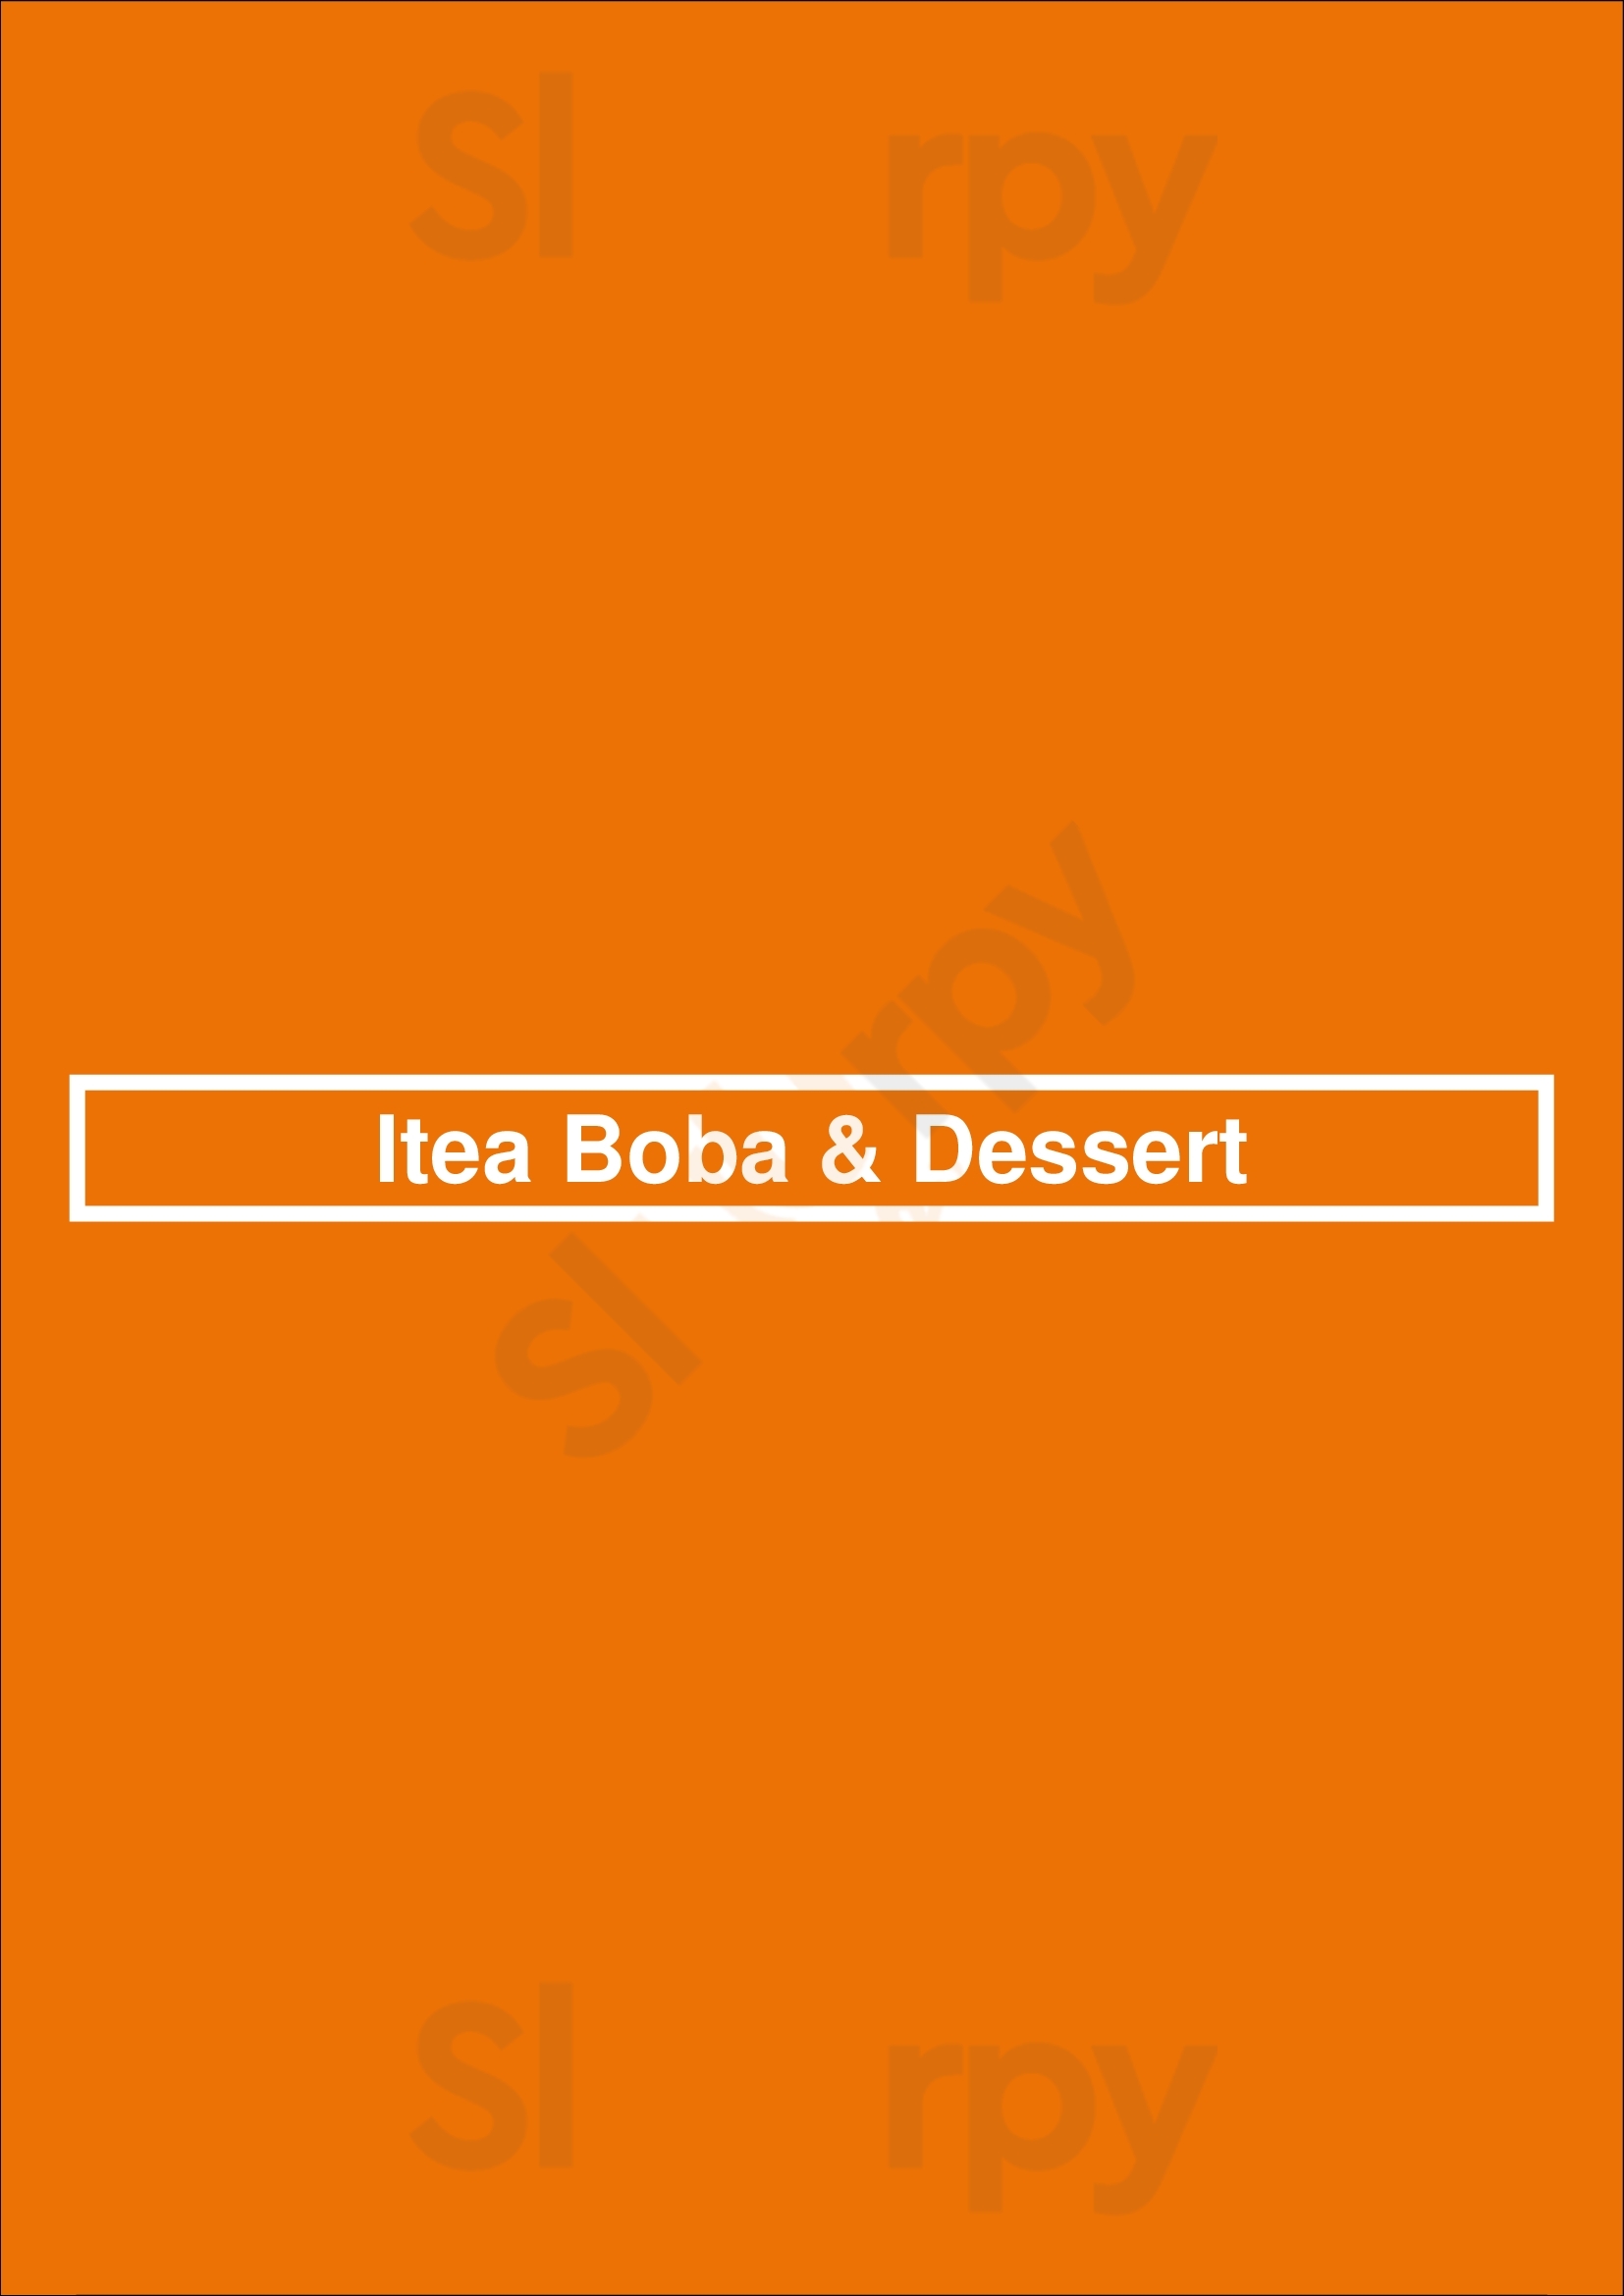 Itea Boba & Dessert Las Vegas Menu - 1